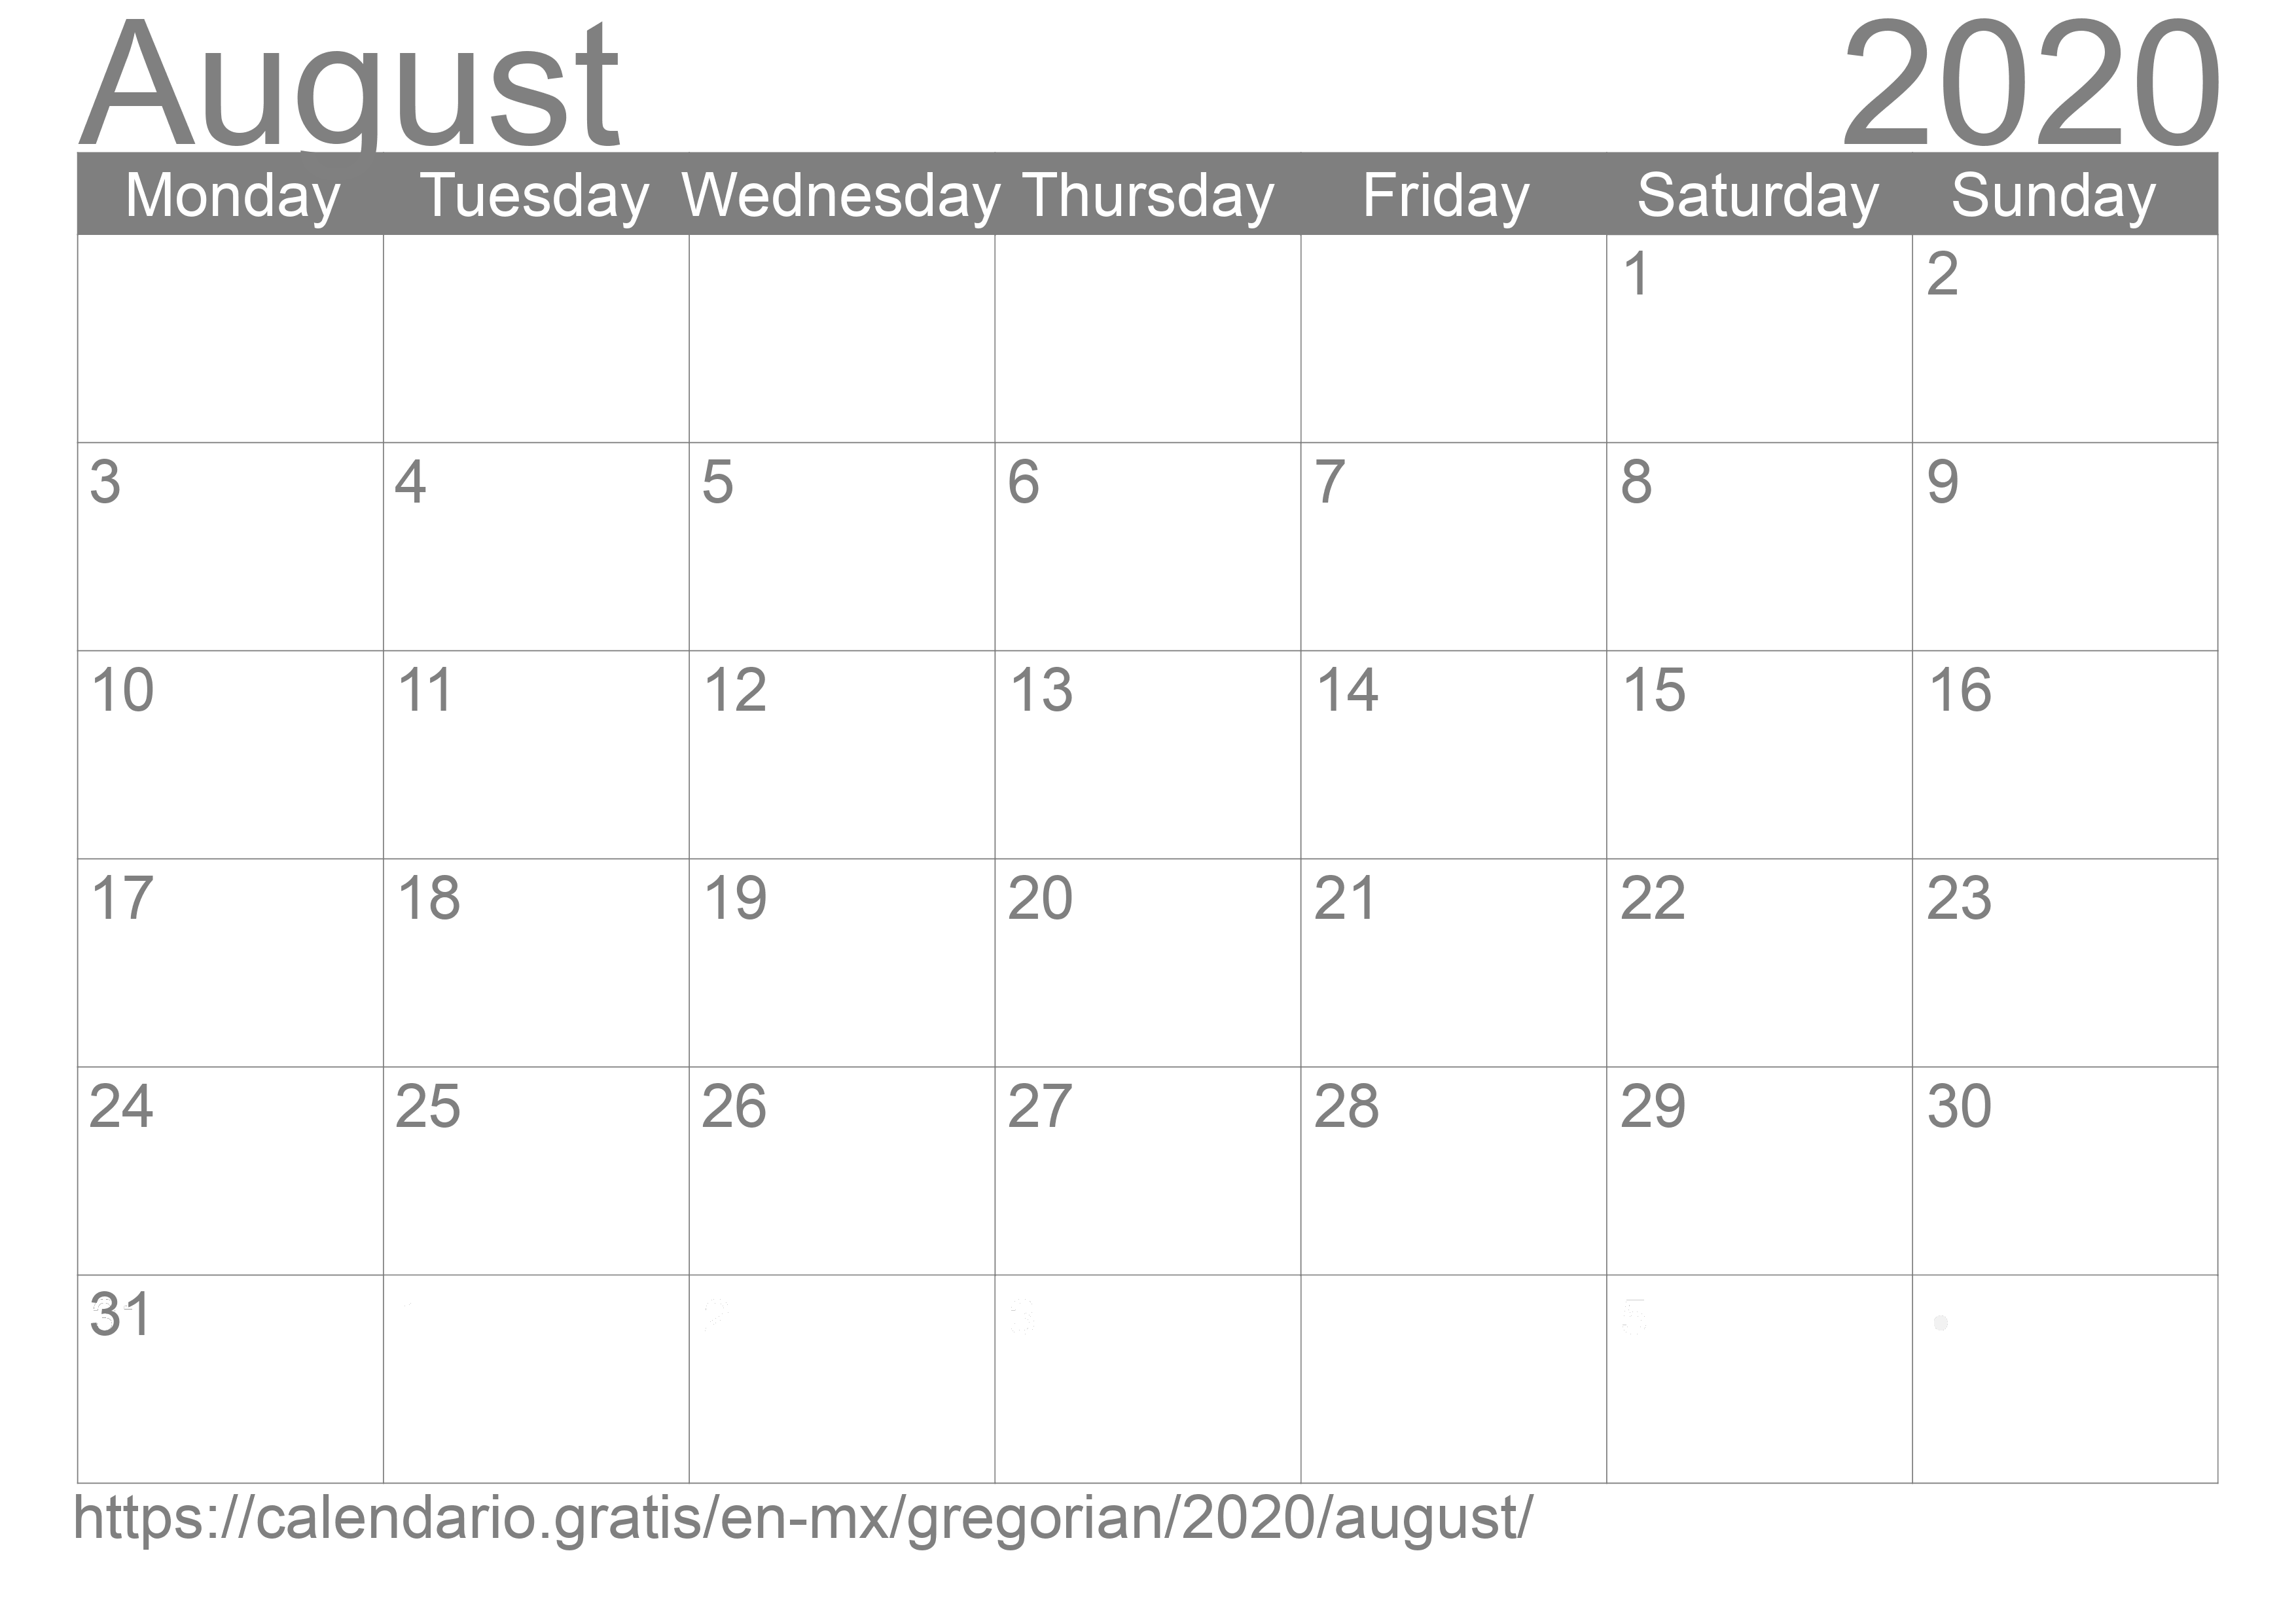 Calendar August 2020 to print